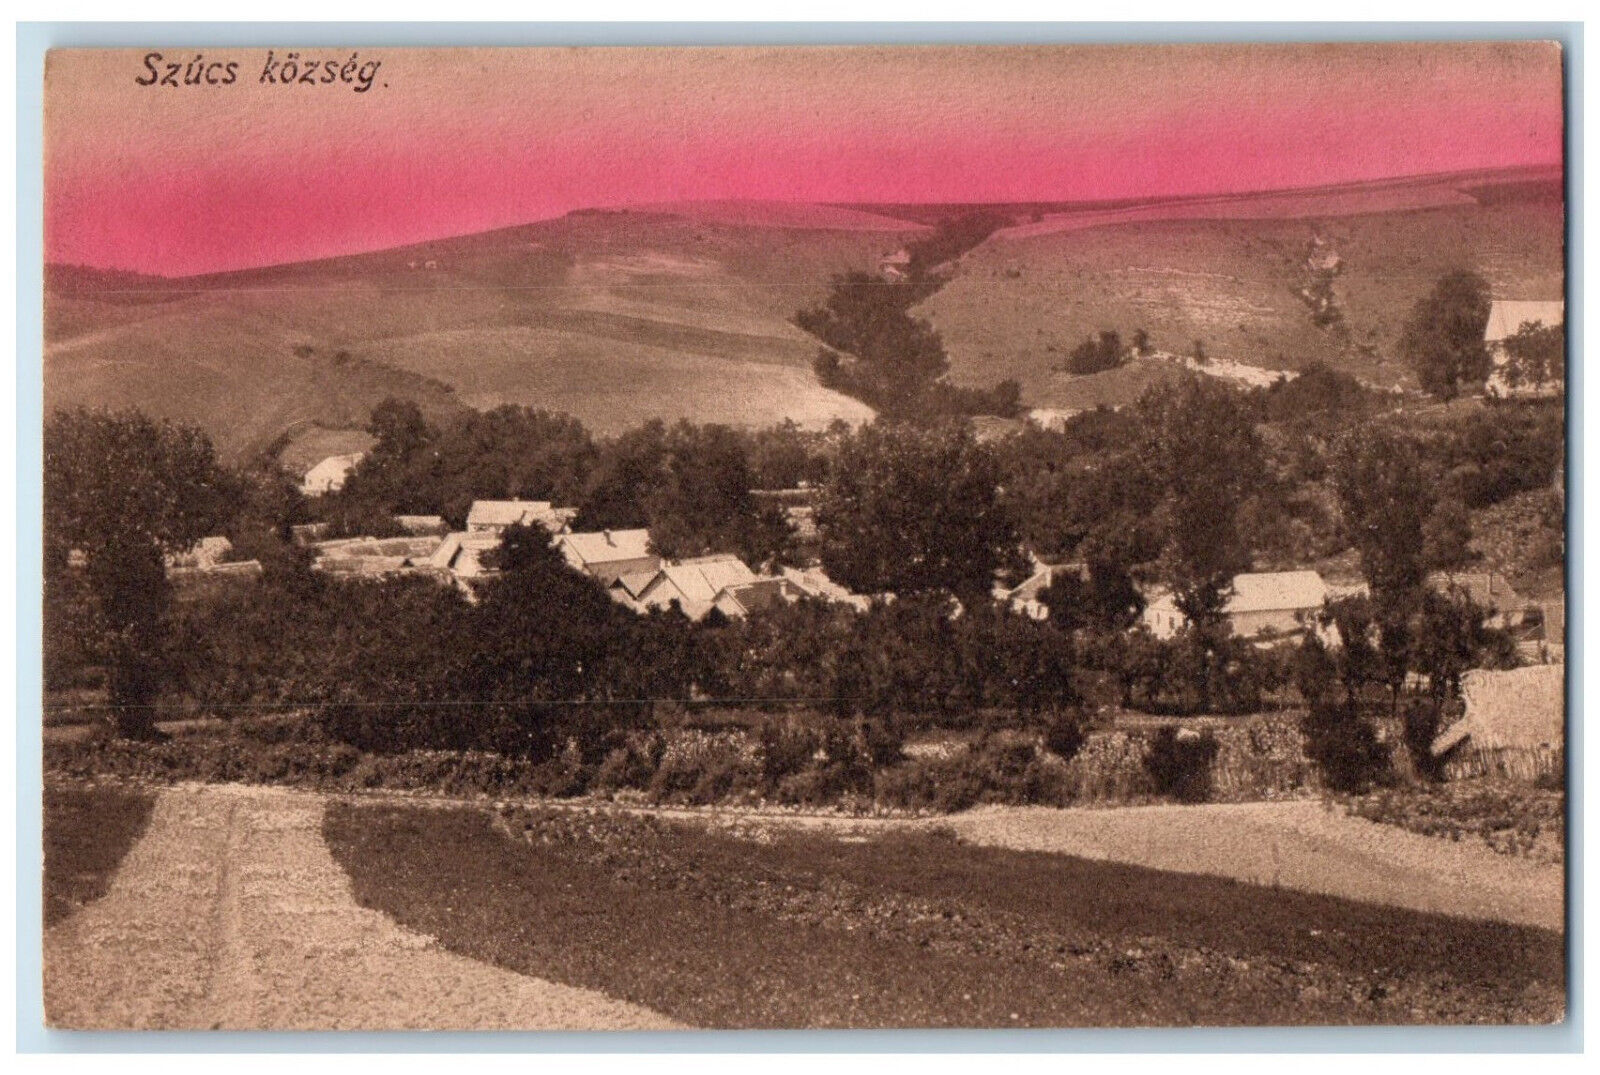 Szucs Kozseg Hungary Postcard Scene of Trees and Hills c1910 Unposted Antique